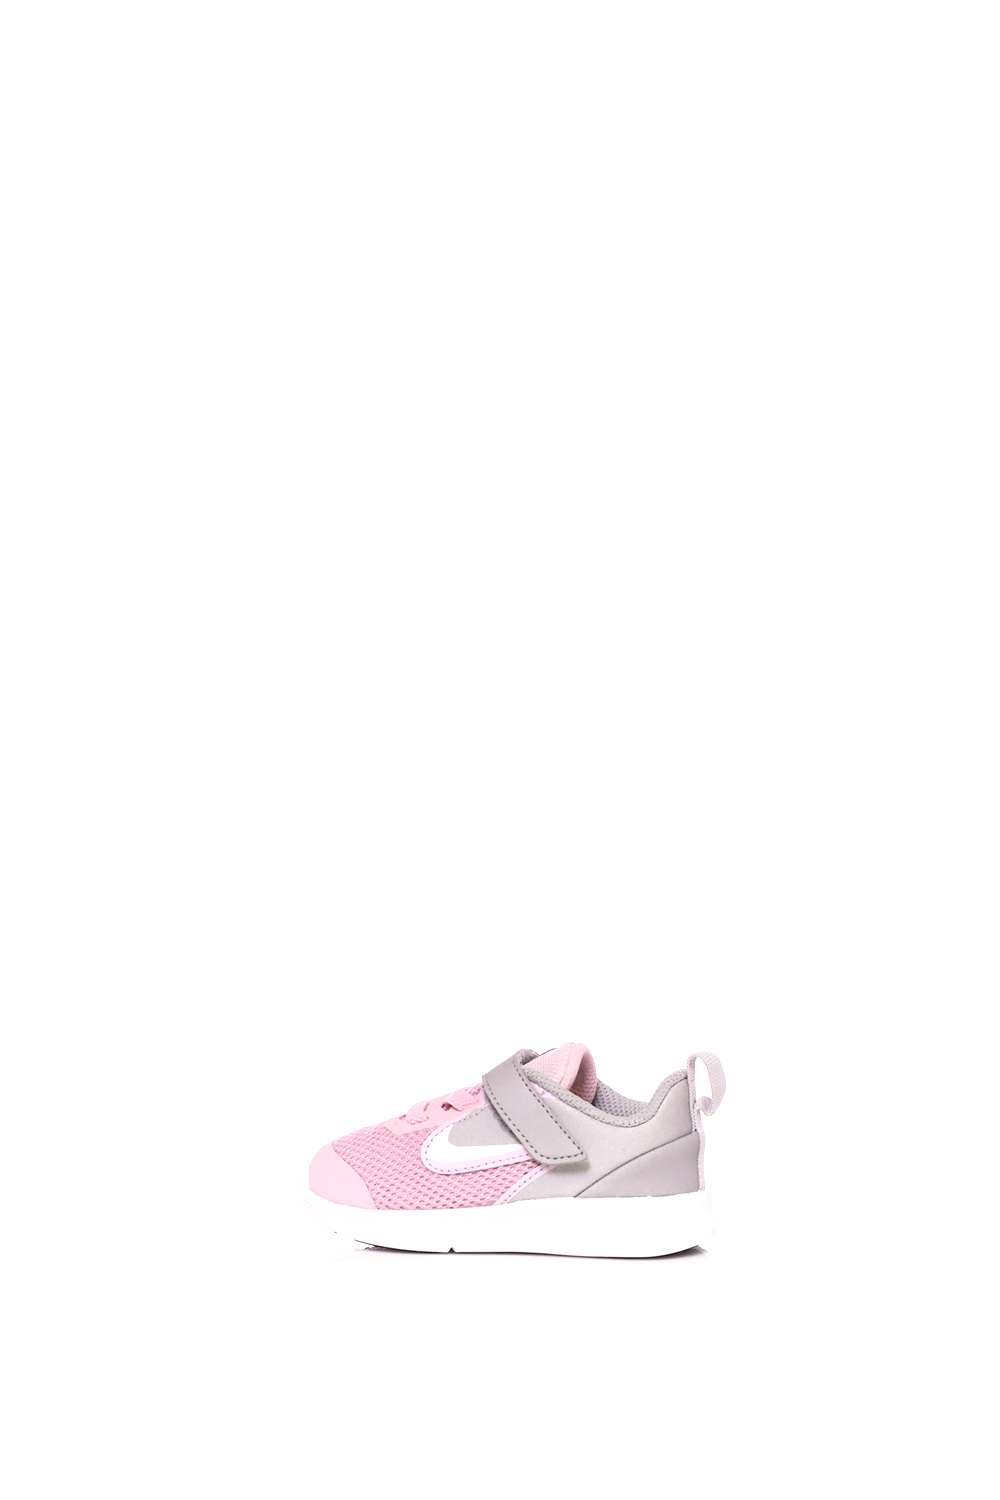 NIKE – Βρεφικα αθλητικα παπουτσια NIKE DOWNSHIFTER 9 ροζ